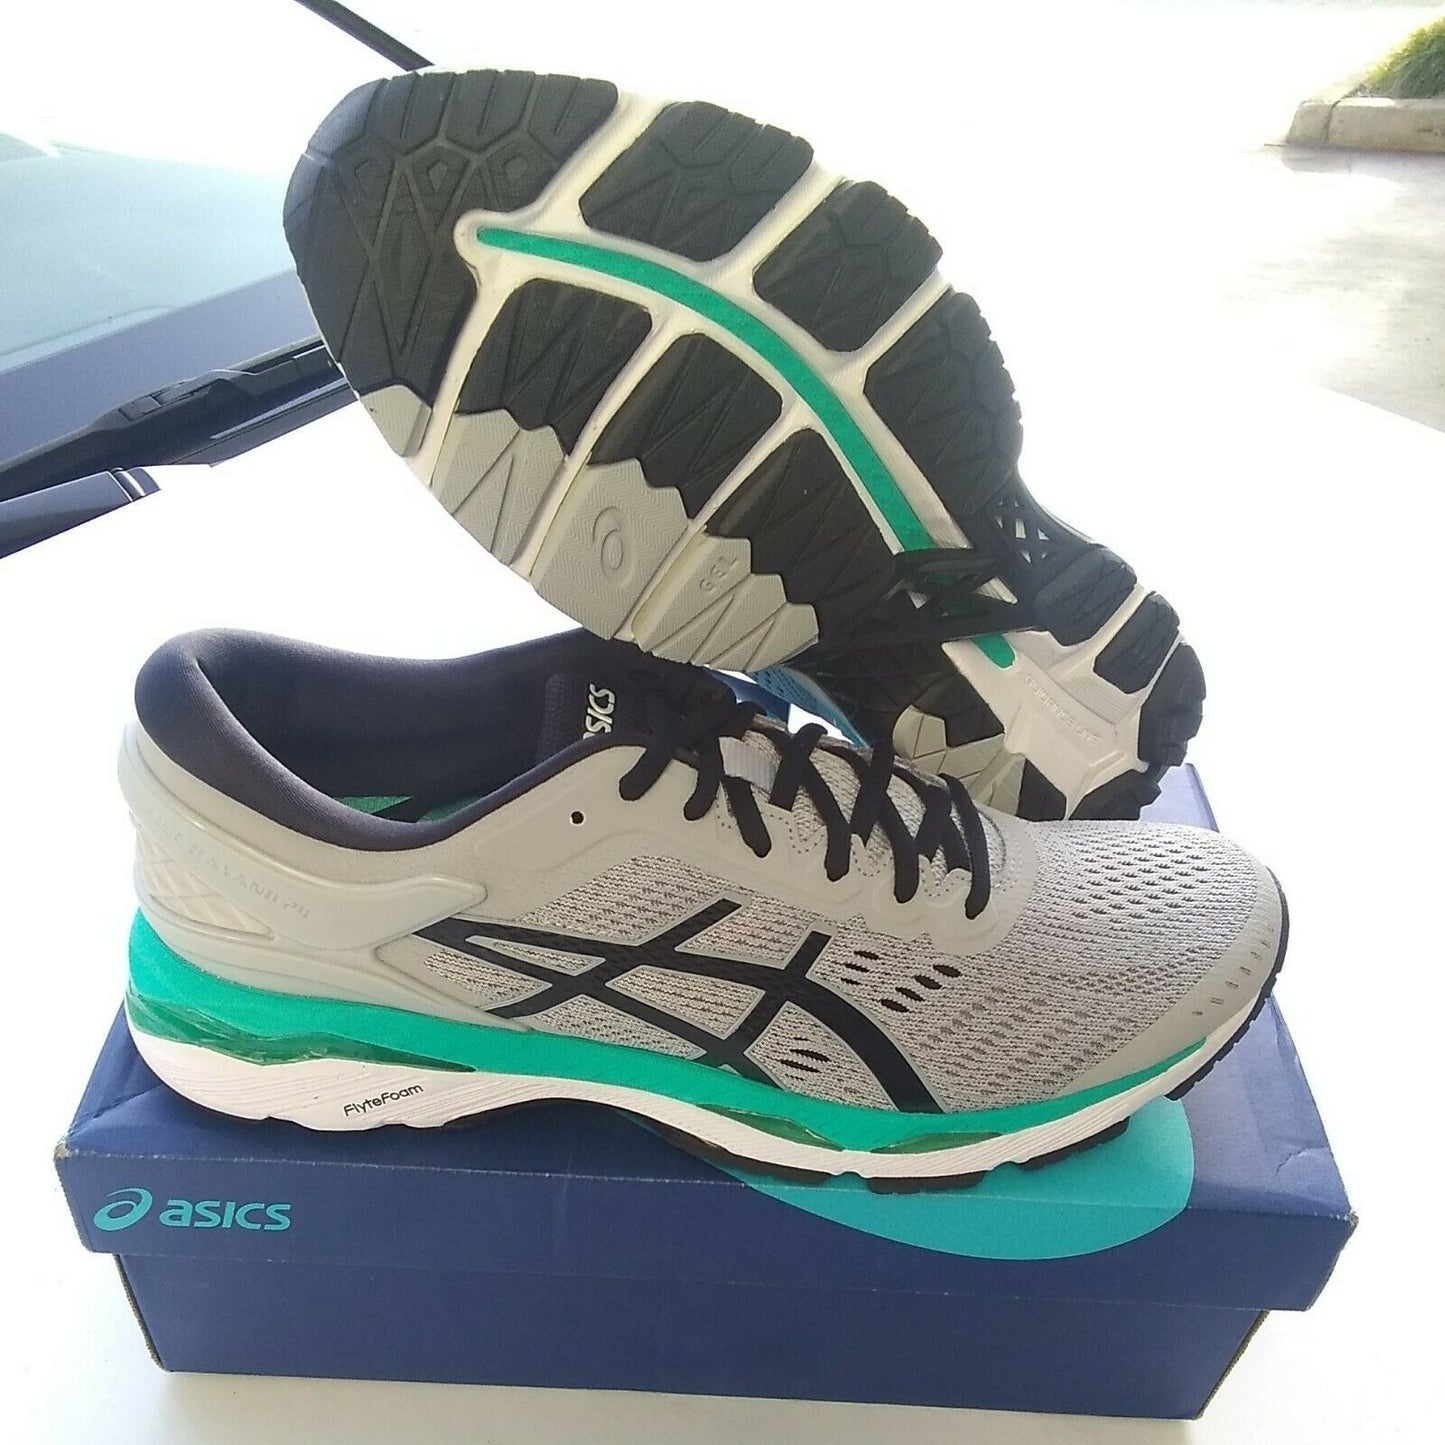 Asics woman gel kayano 24 size 12 mid grey black atlantis new running shoes